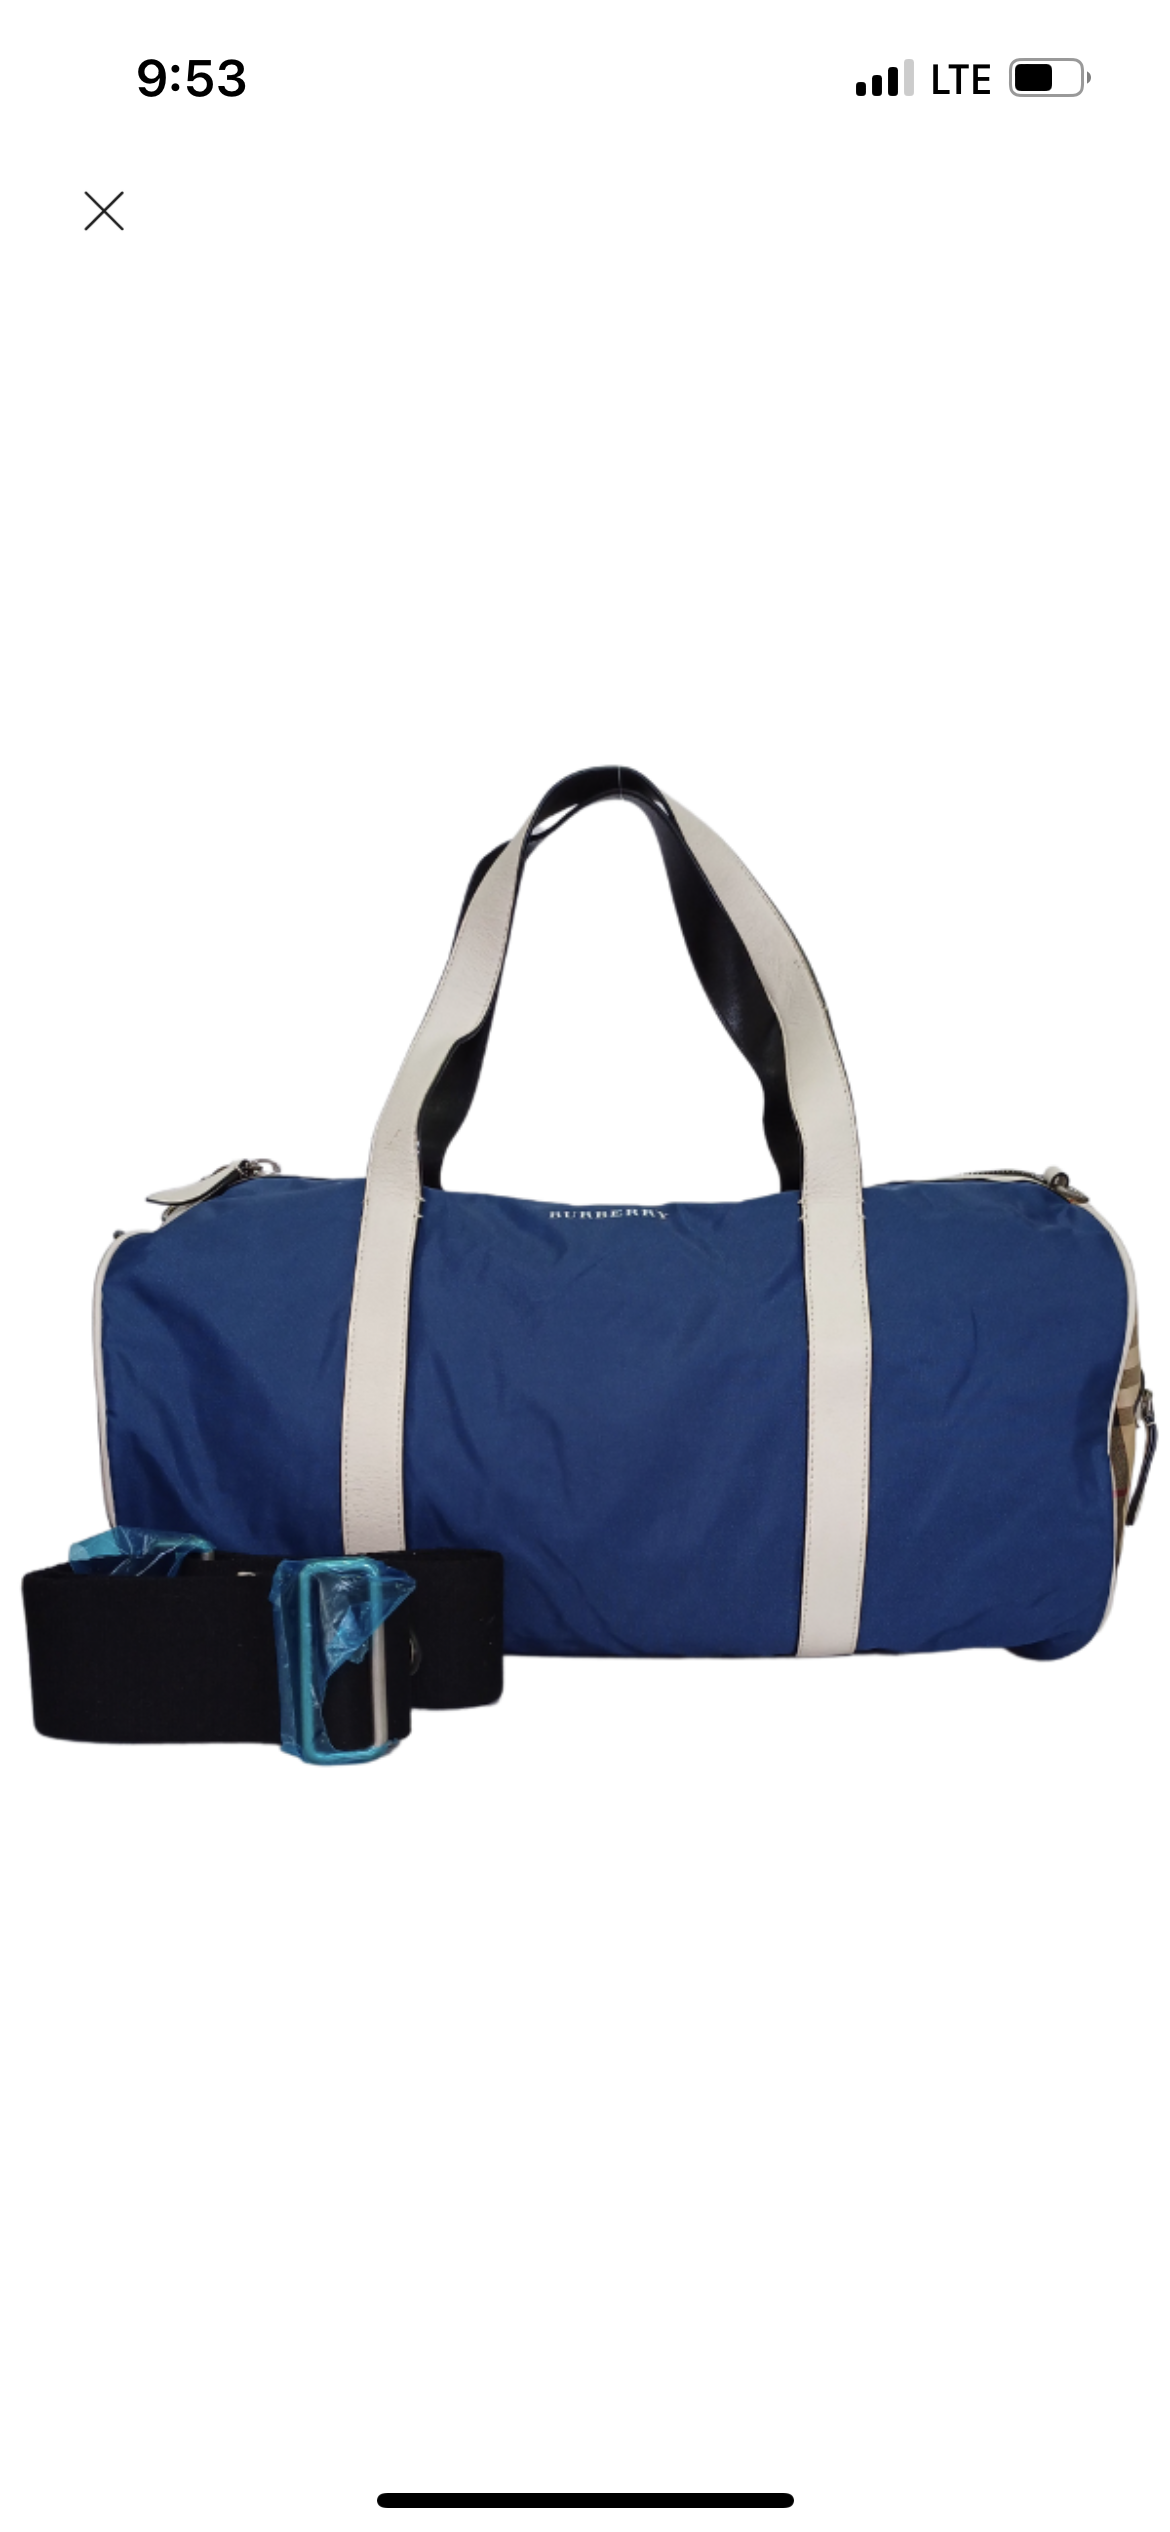 Burberry White/Blue Hand Duffle Bag